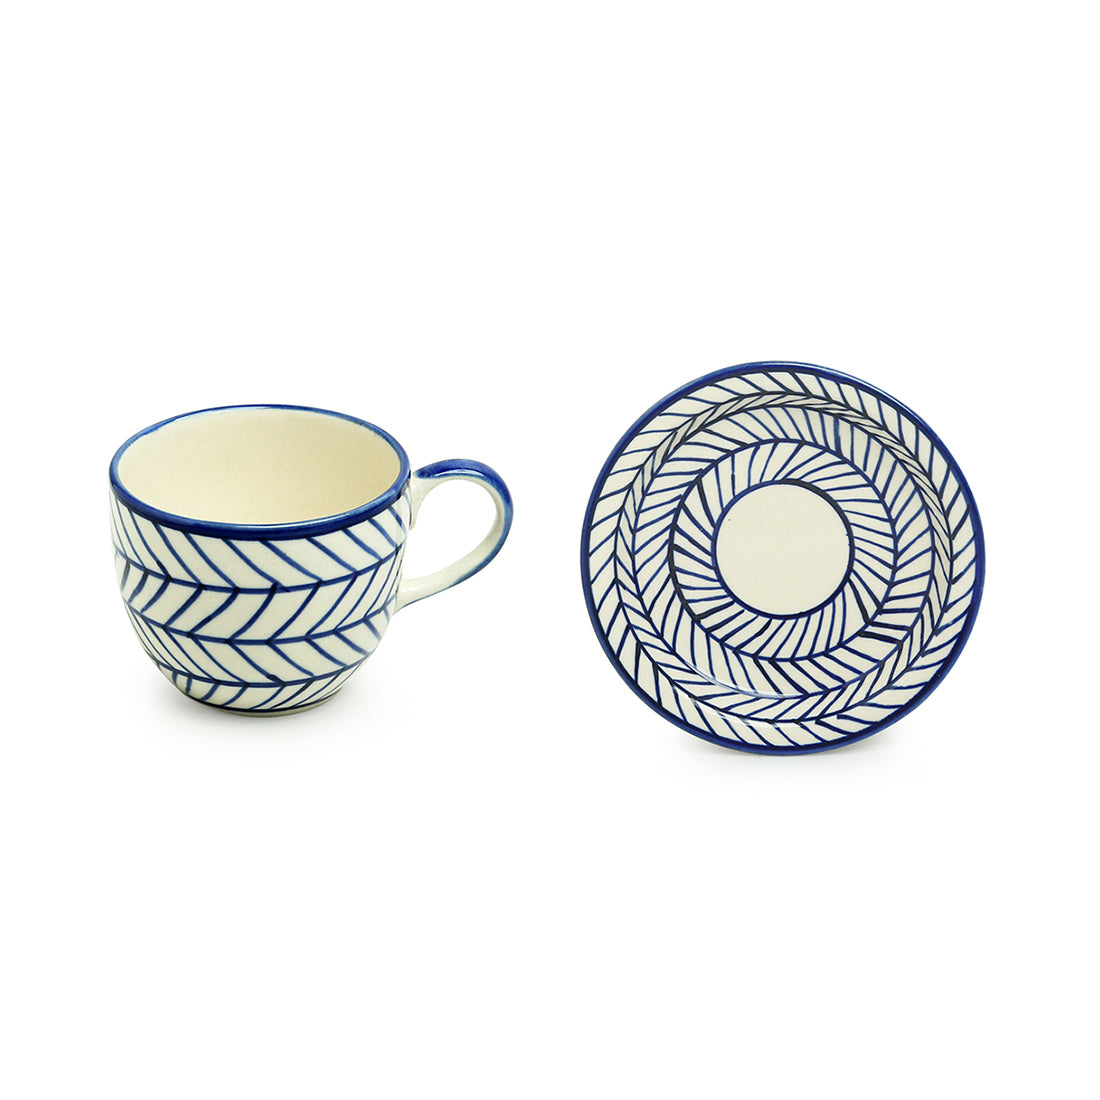 'Indigo Chevron' Handpainted Ceramic Tea Cups With Saucers (Set of 6, 160 ML, Microwave Safe)